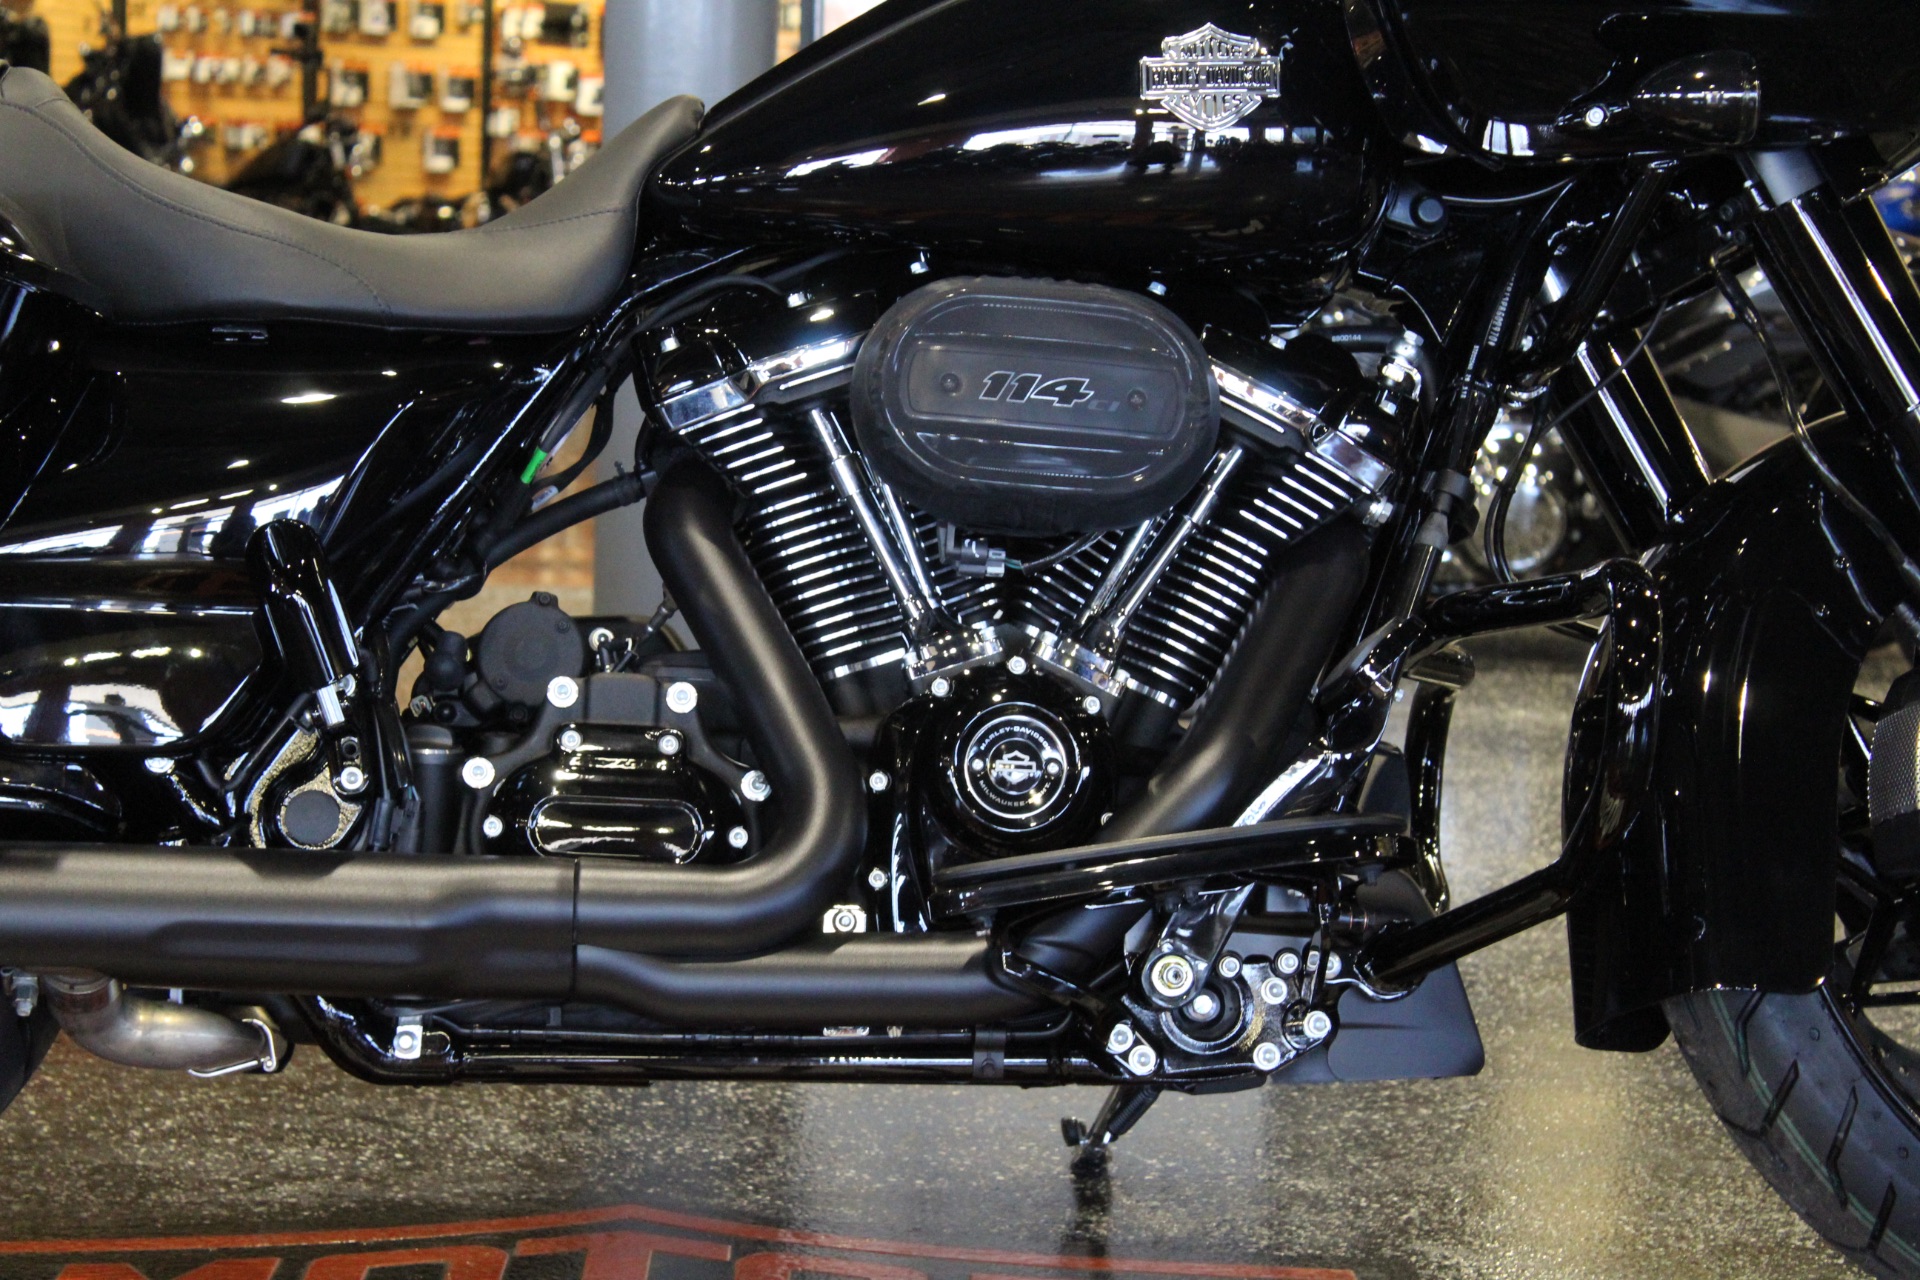 2023 Harley-Davidson Road Glide® Special in Mount Vernon, Illinois - Photo 2